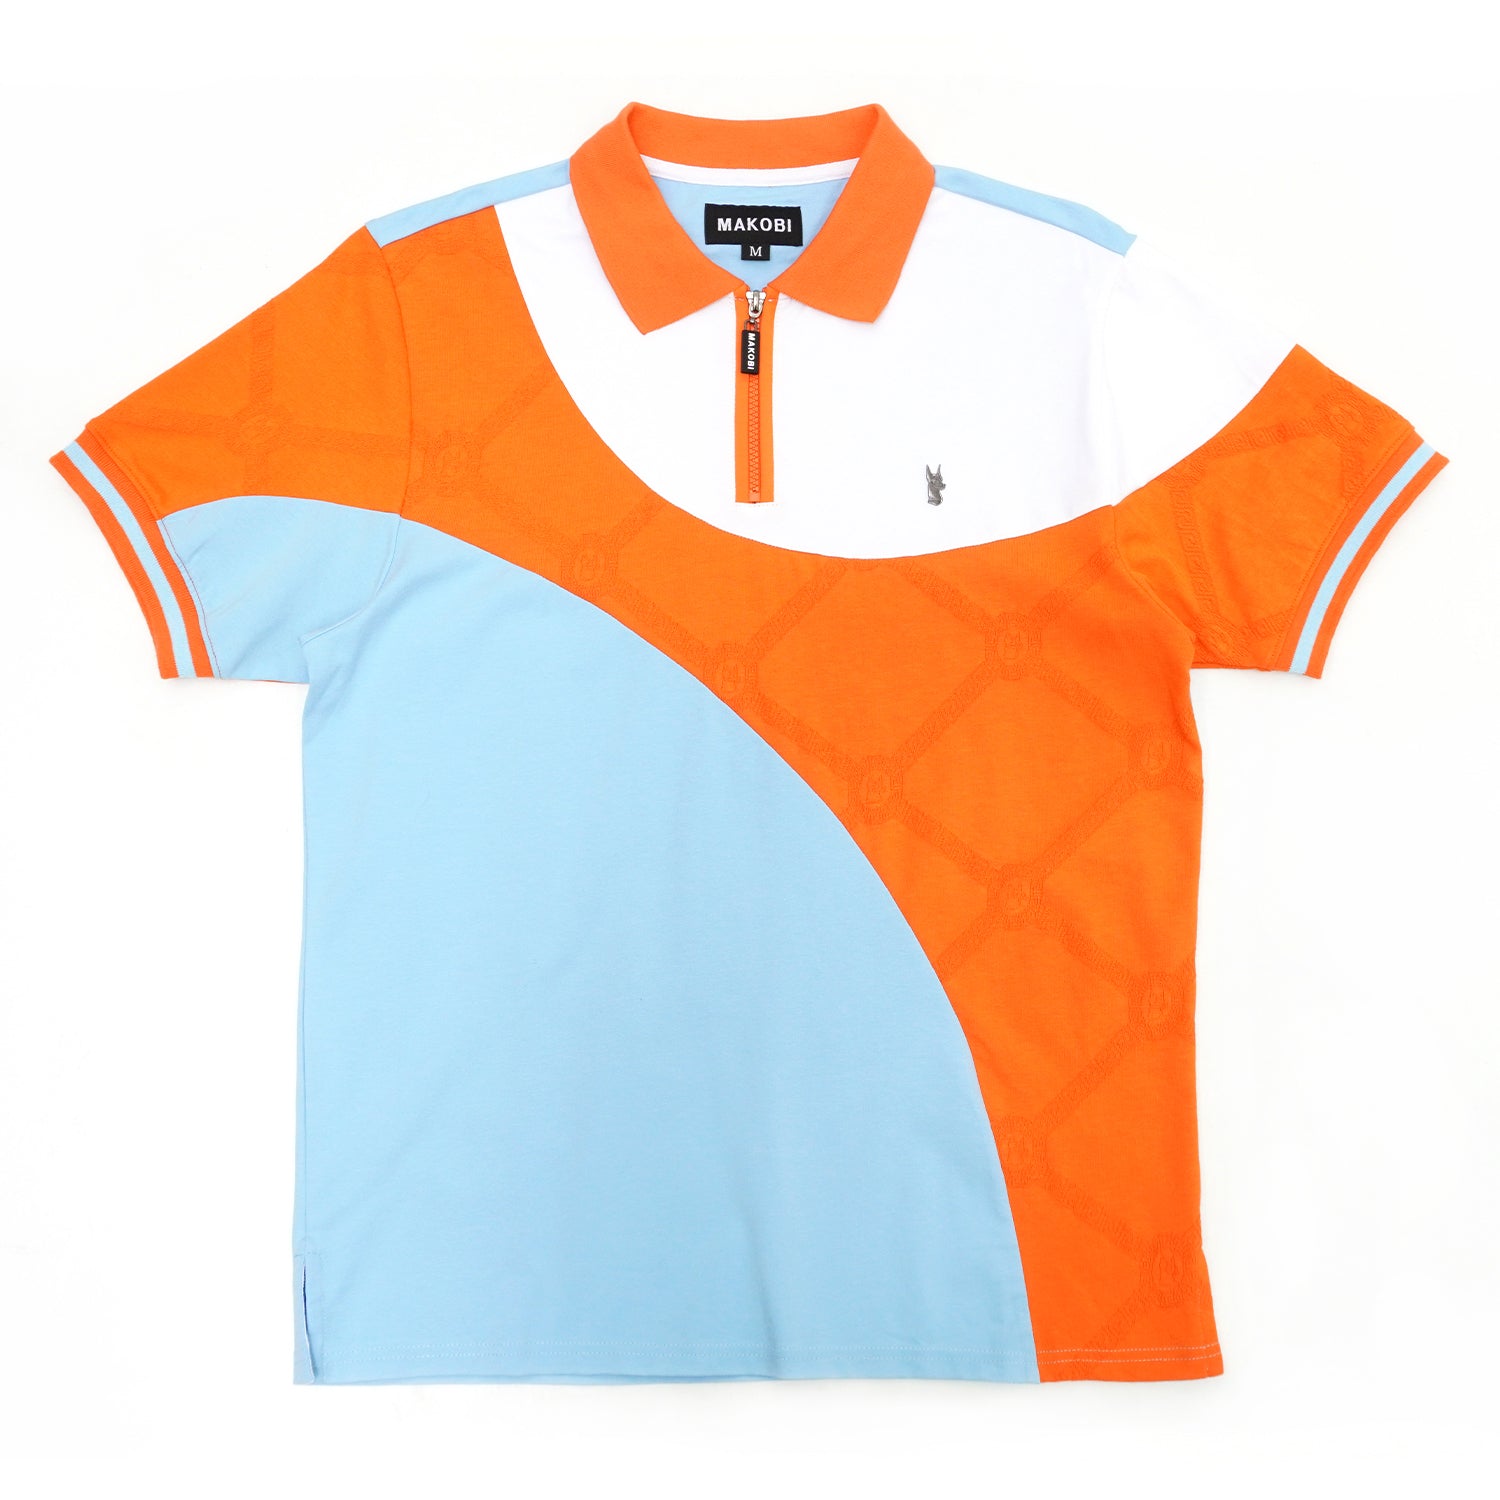 تی شرت پولو مونوگرام M201 - نارنجی